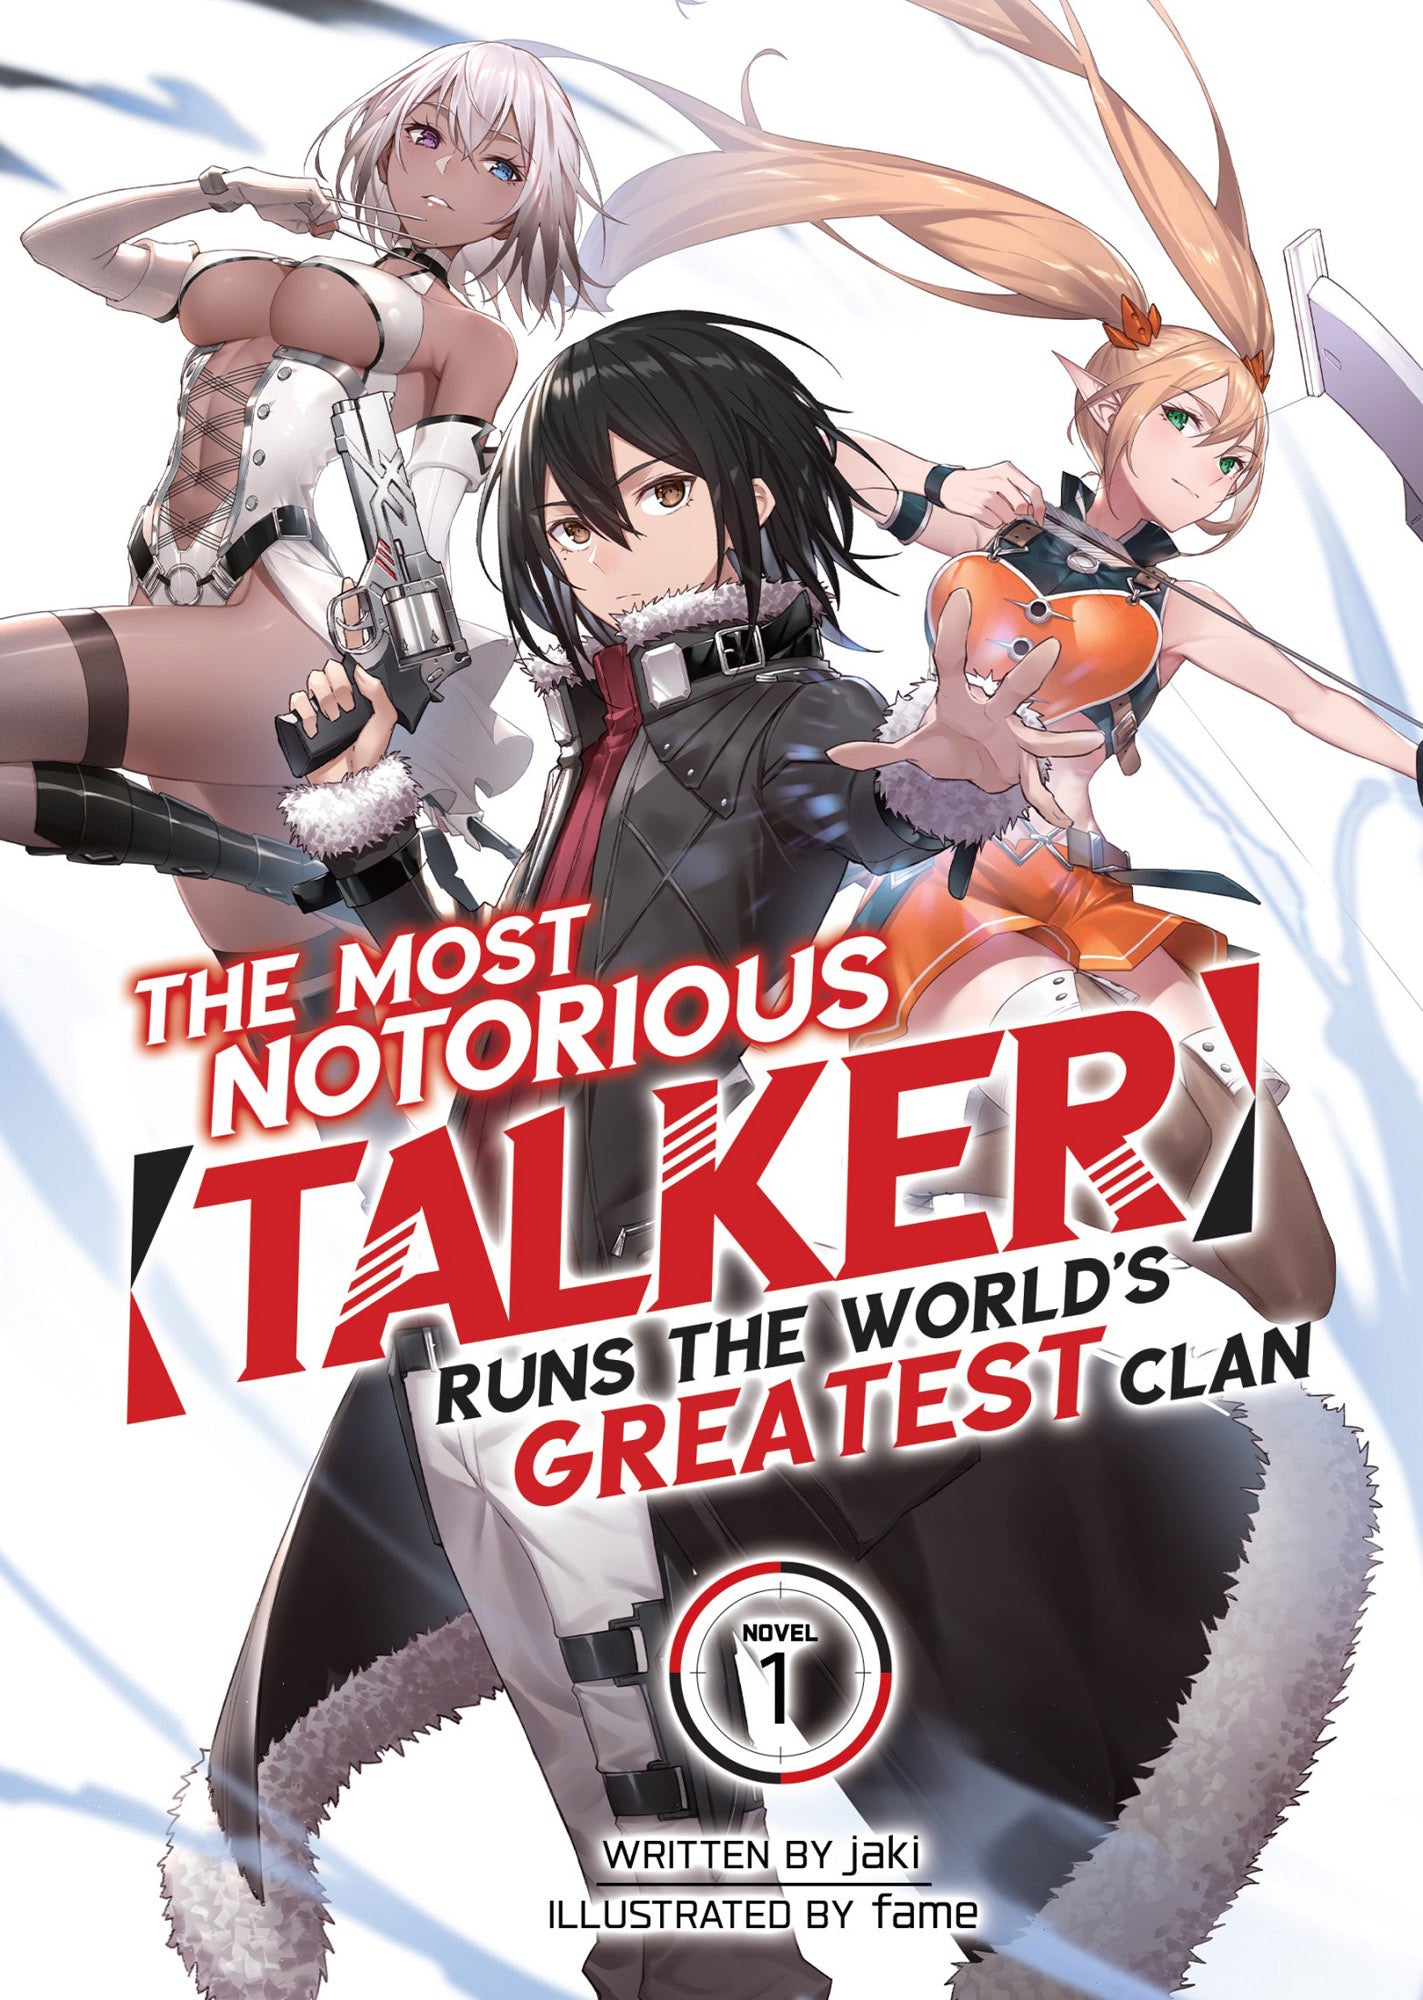 The Most Notorious Talker Runs the World's Greatest Clan (Light Novel) Vol. 01